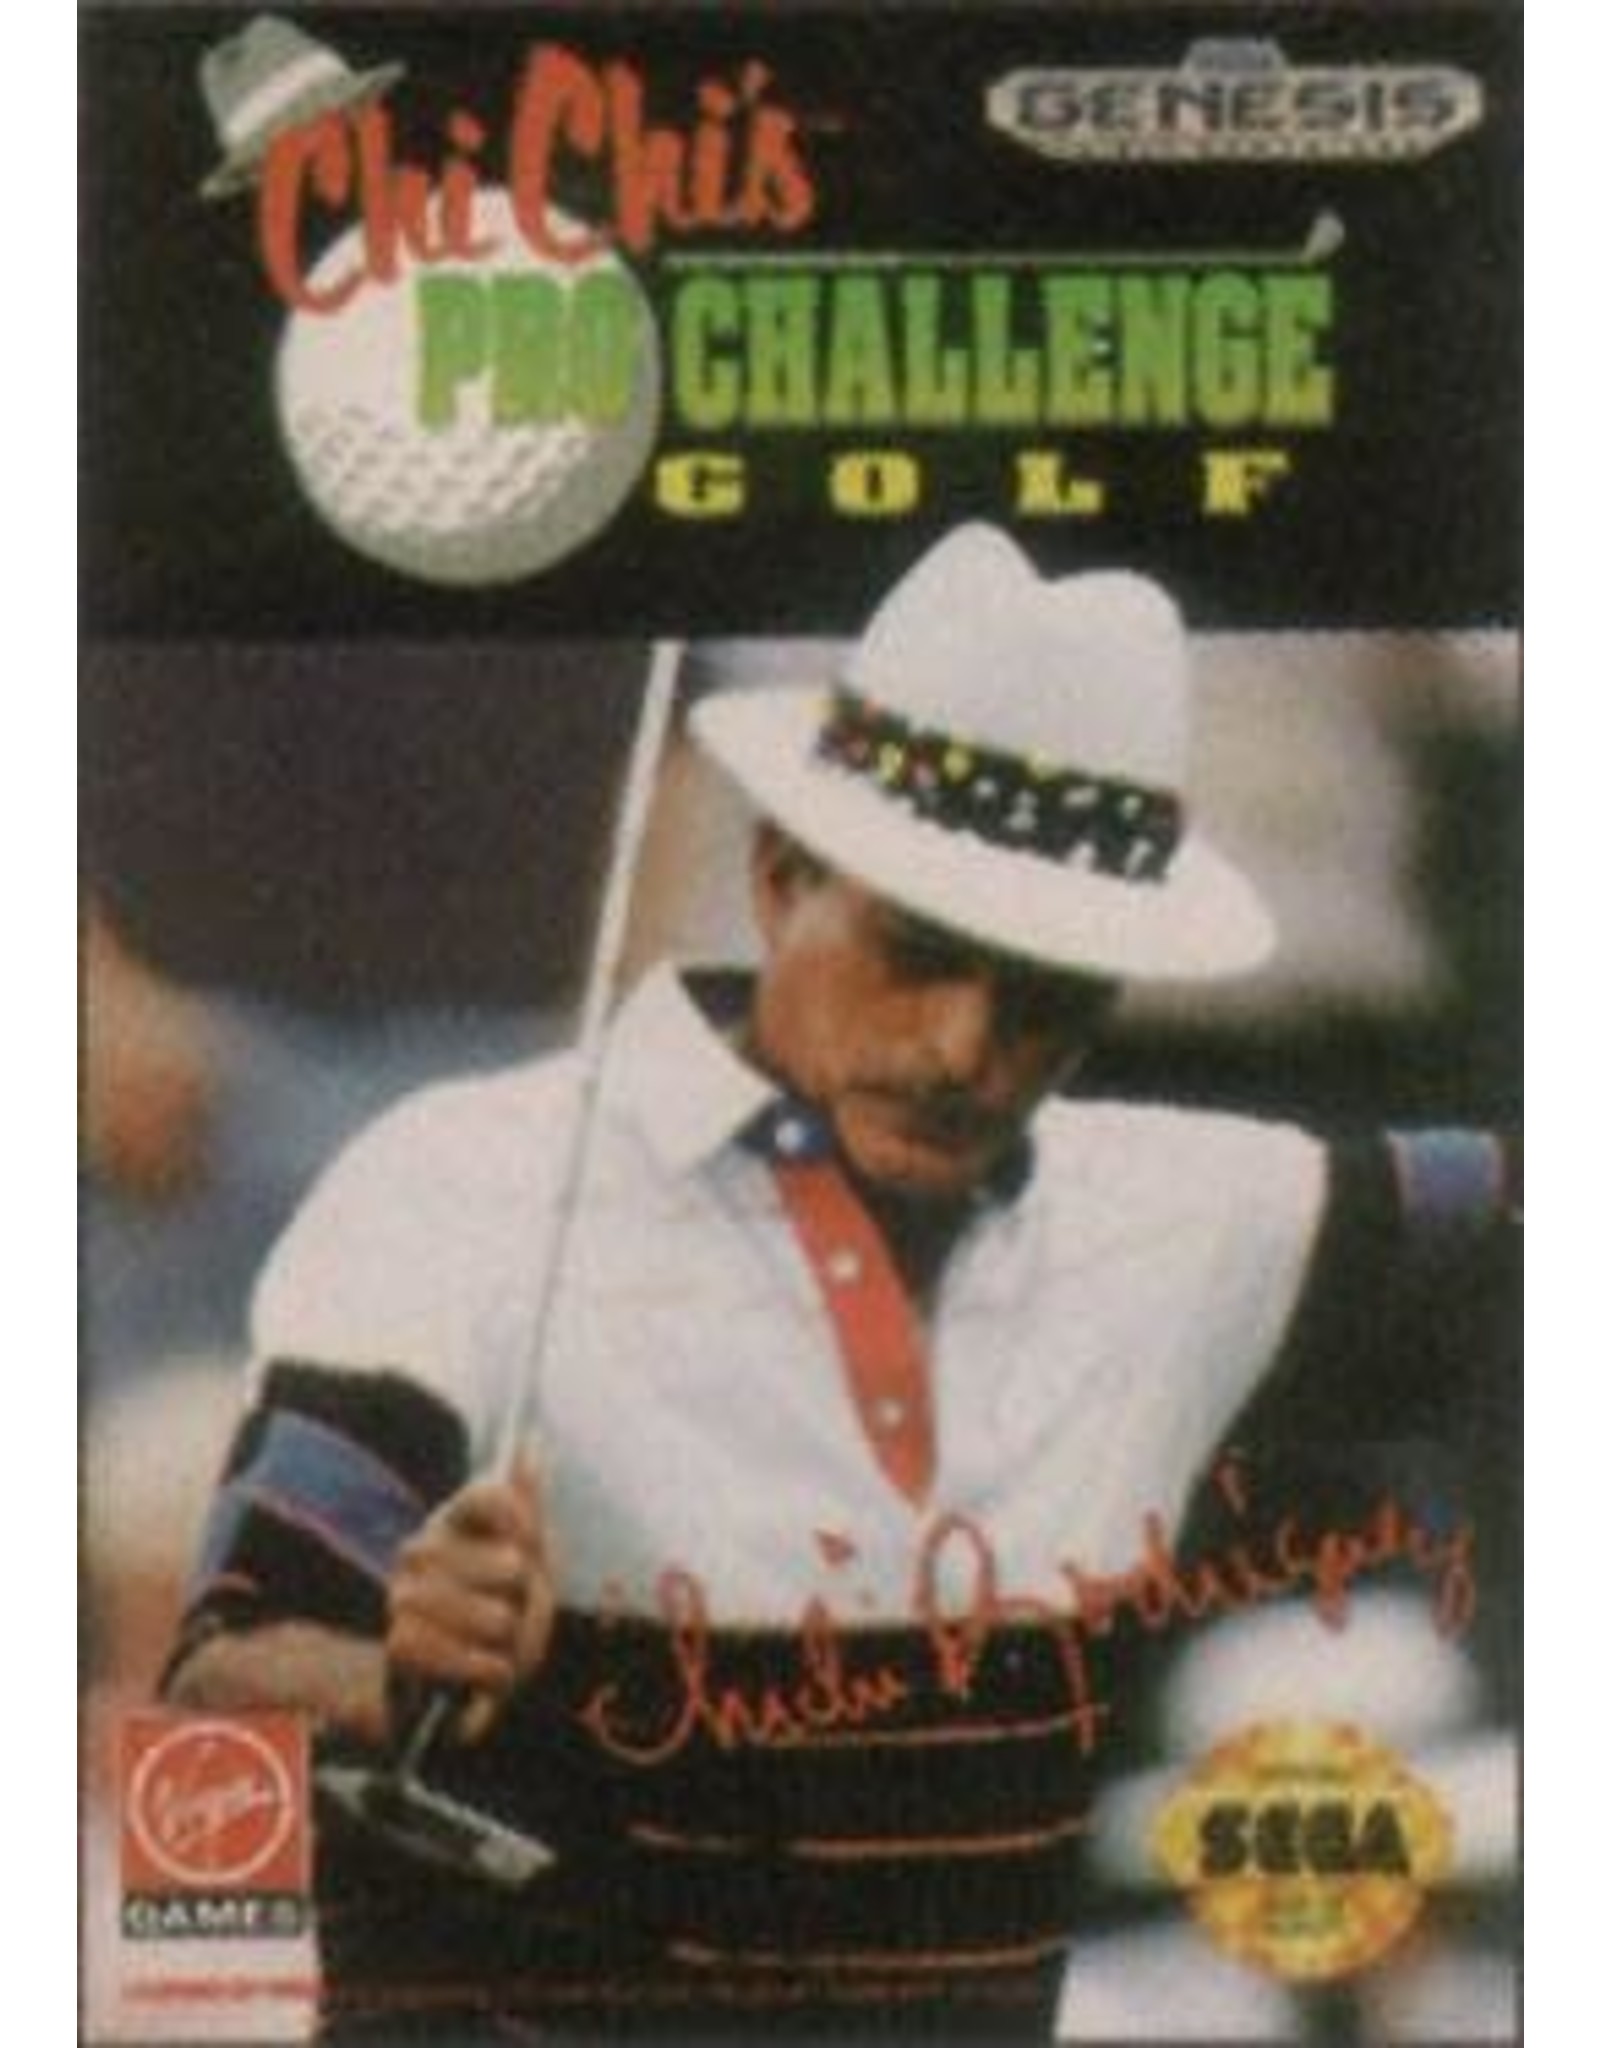 Sega Genesis Chi Chi's Pro Challenge Golf (Boxed, No Manual)